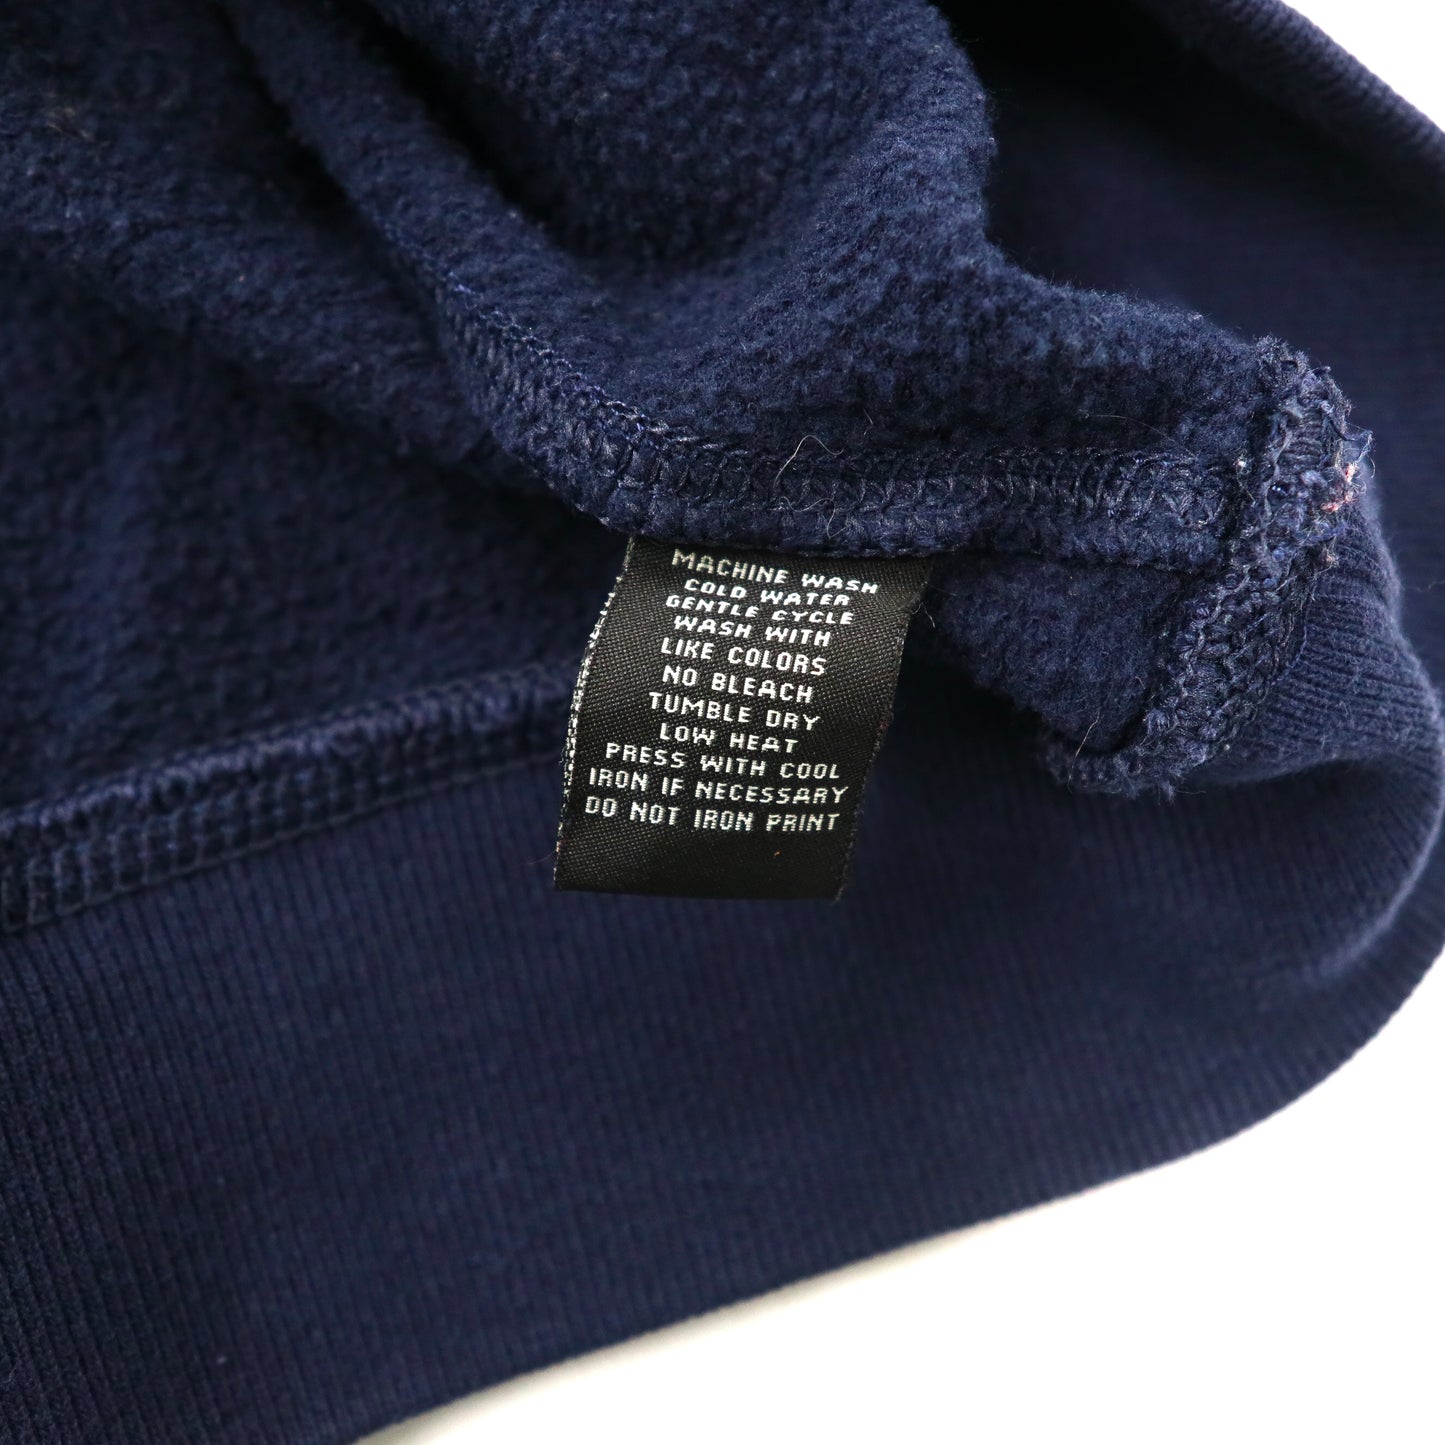 Polo Jeans Co. RALPH LAUREN リブライン ロゴプリント スウェット L ネイビー コットン 裏起毛 星条旗 90年代